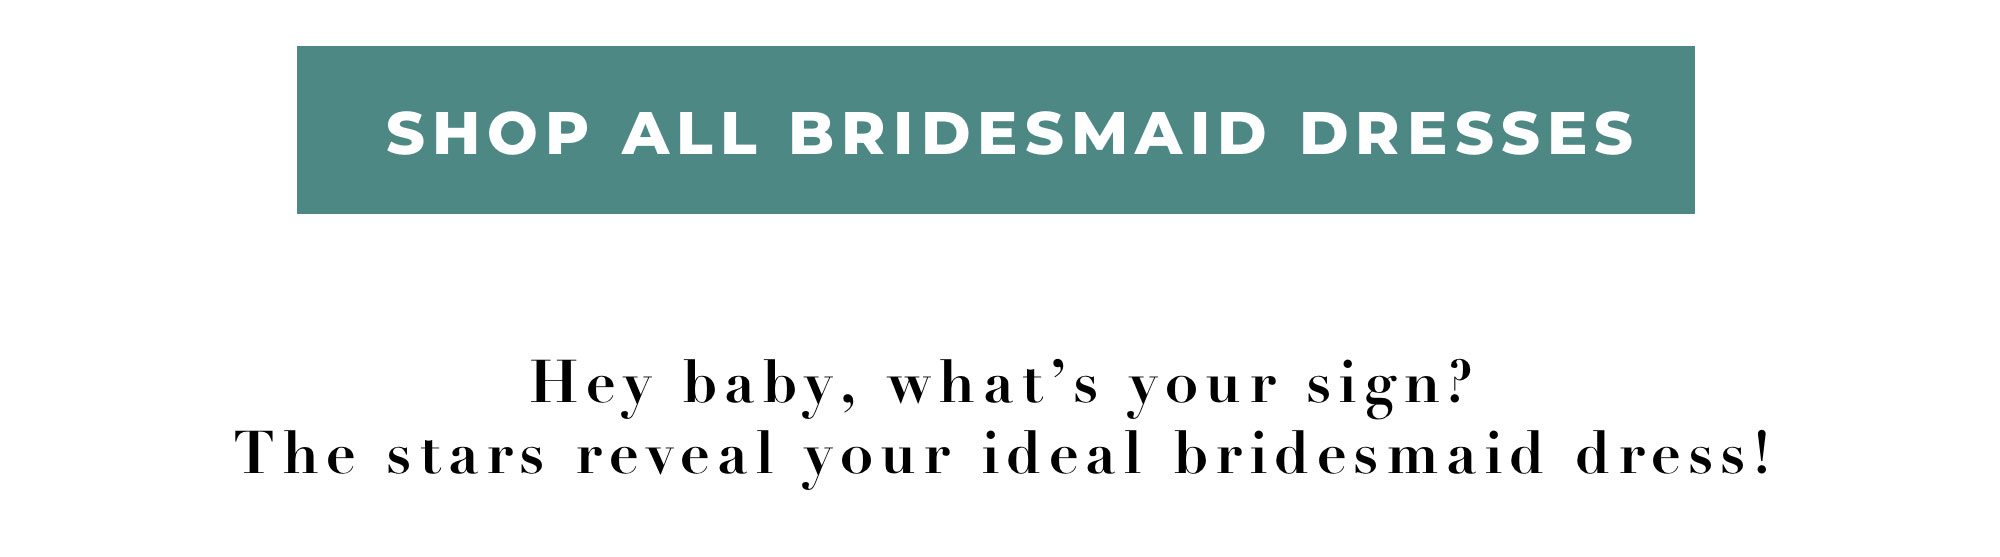 shop all bridesmaids